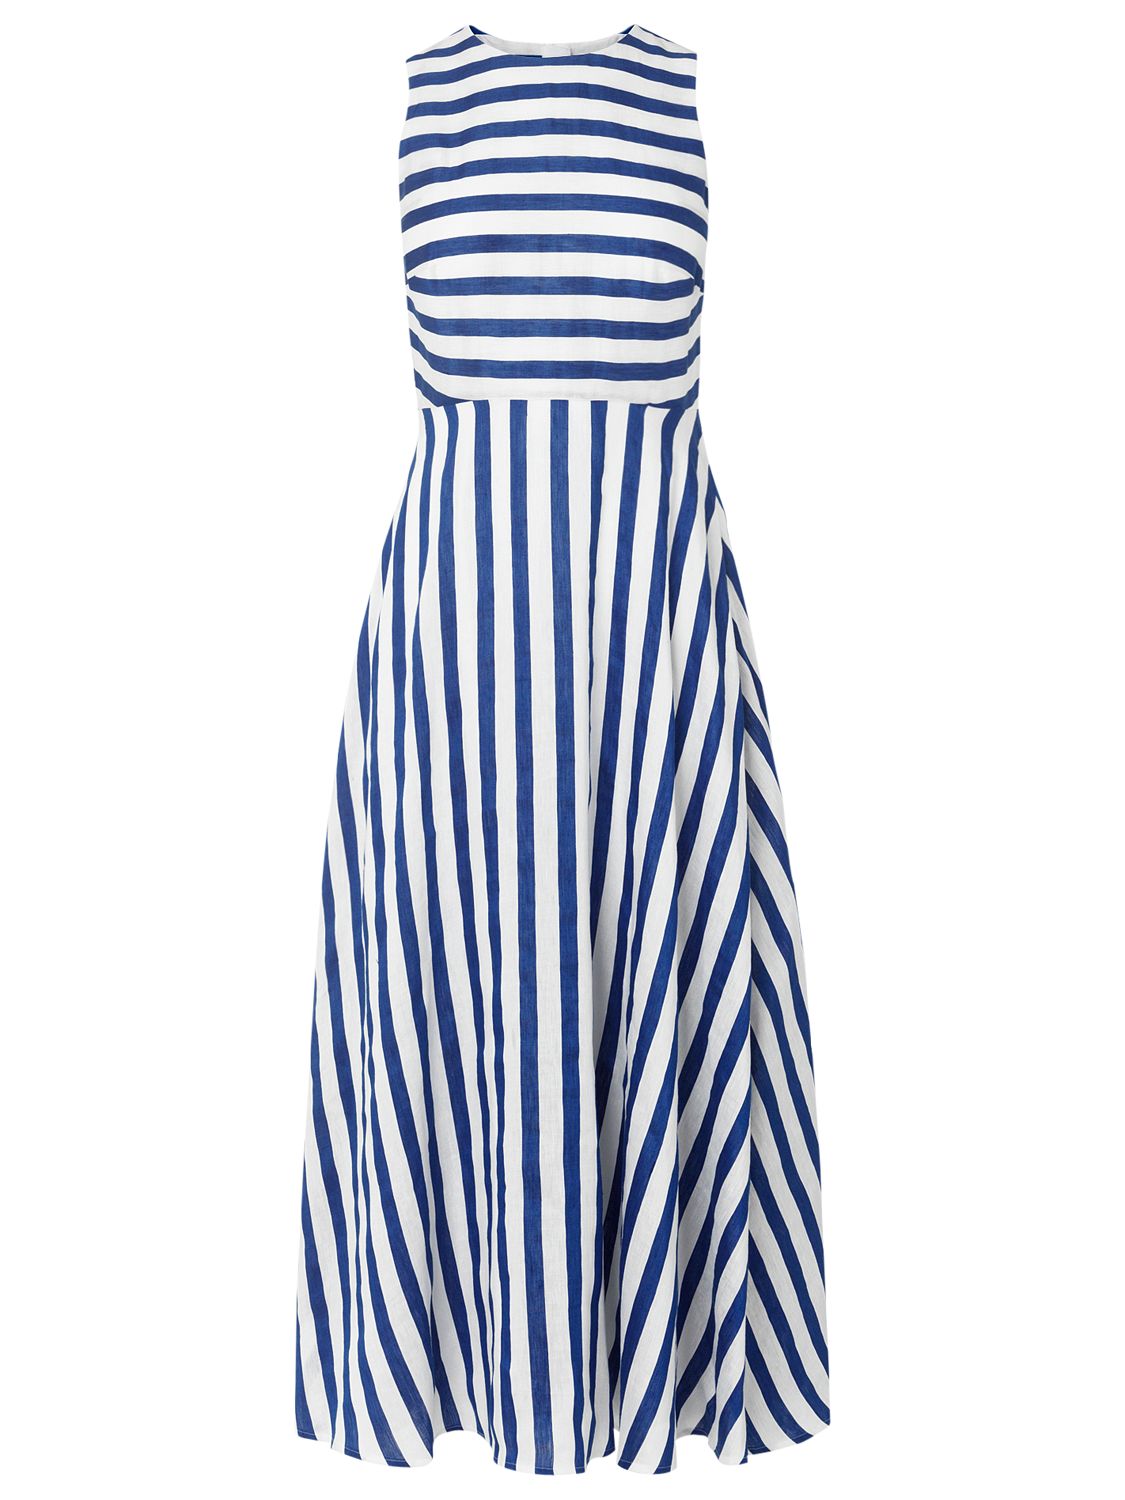 L.K. Bennett Harpa Striped Dress, Blue/White at John Lewis & Partners